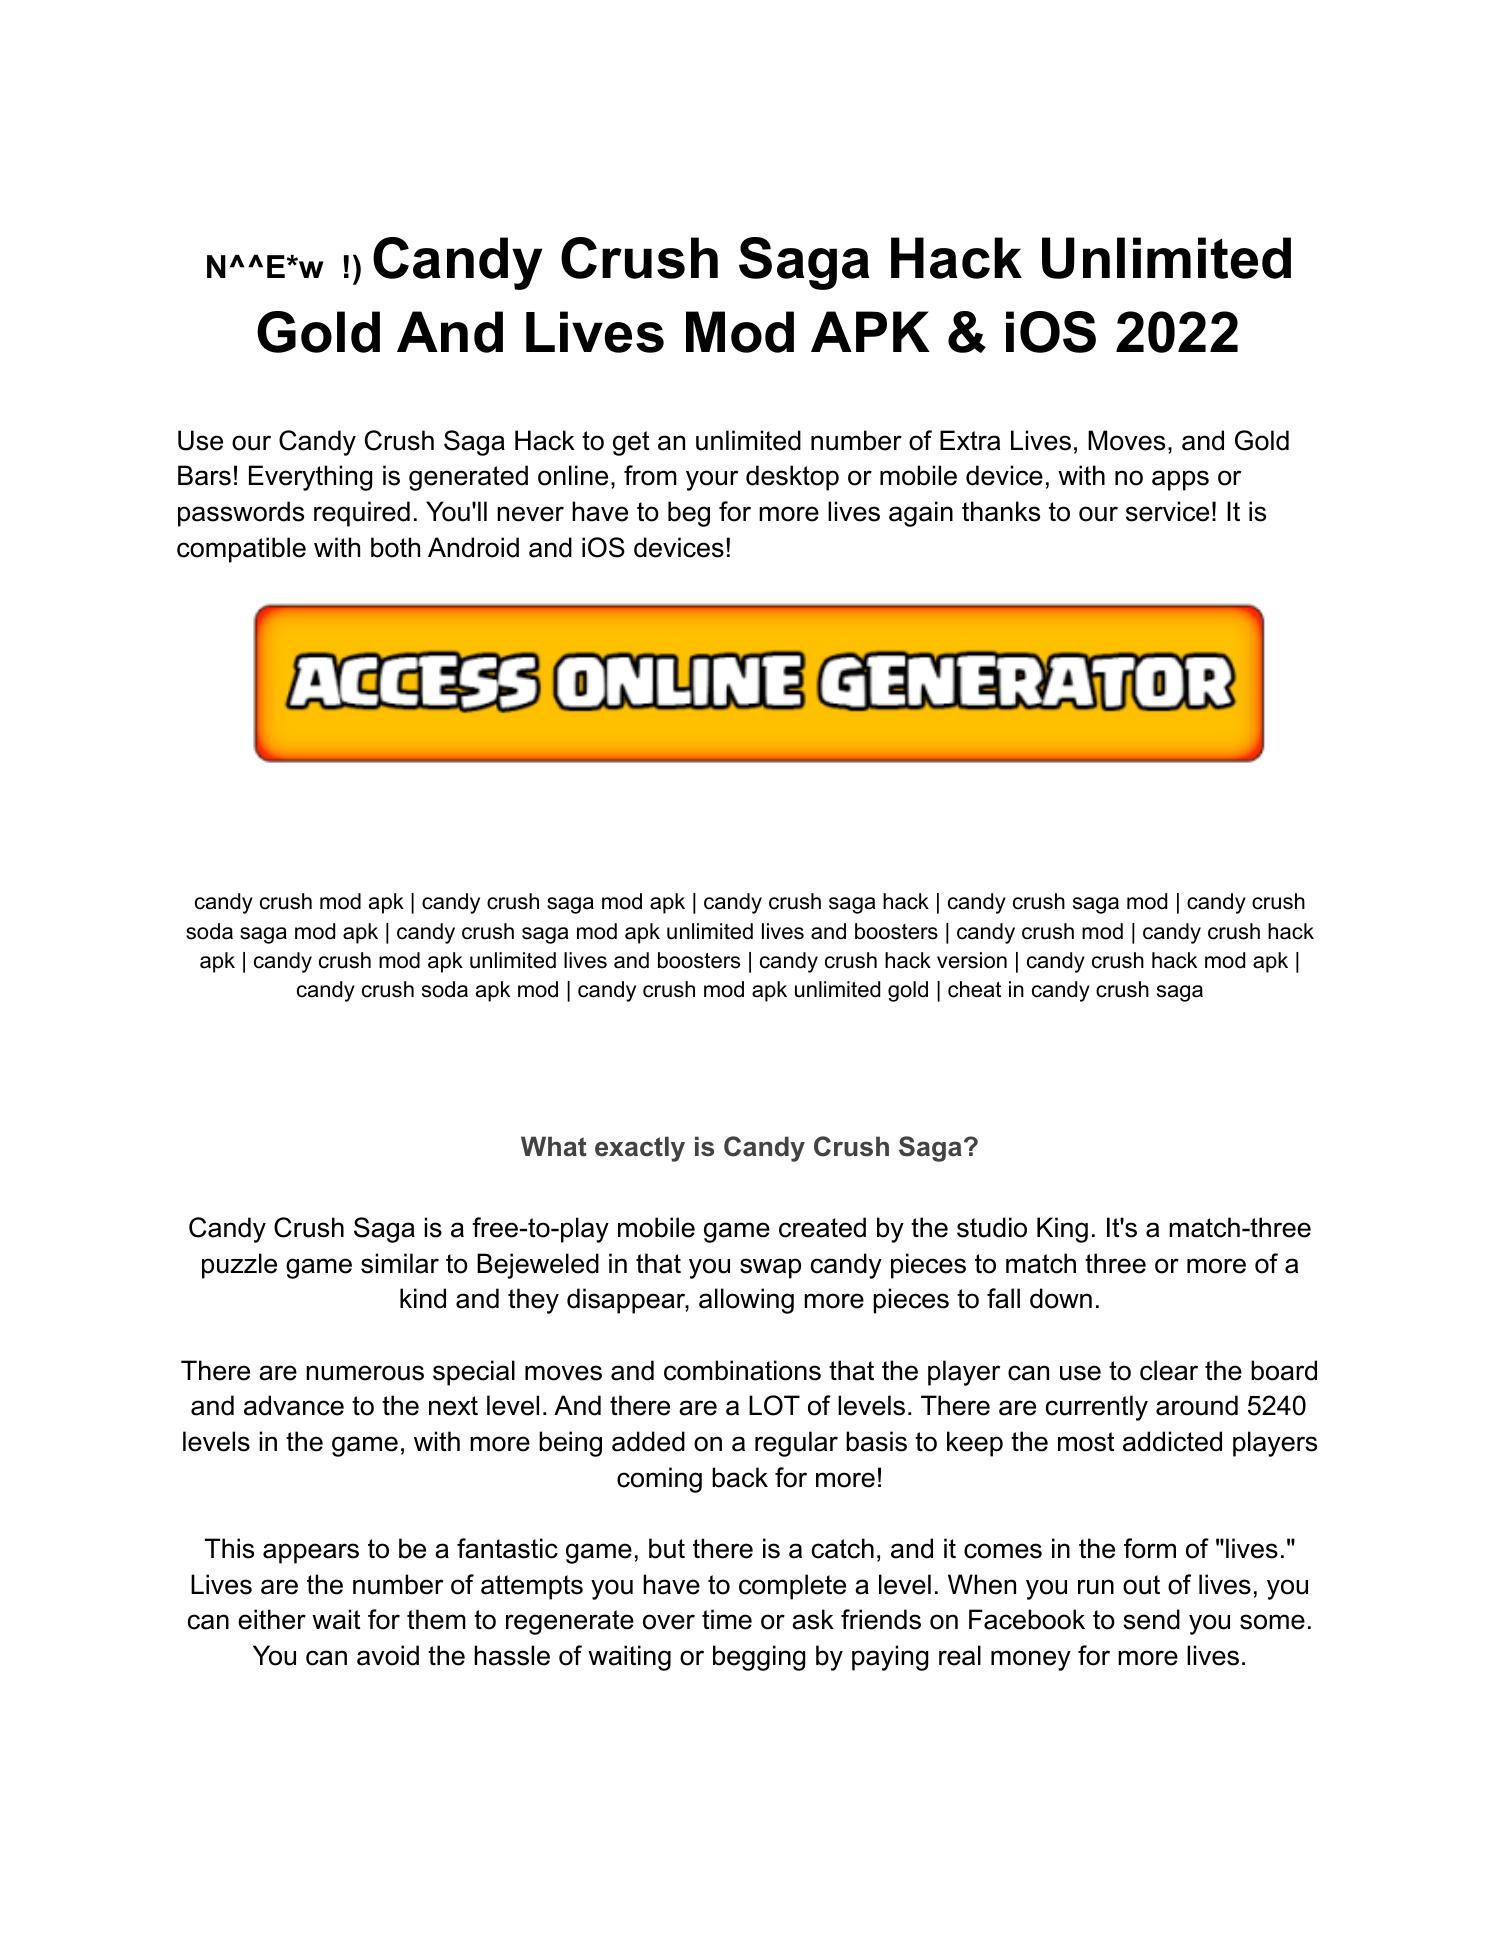 Candy Crush Friends Saga Unlimited Moves Hack MOD APK 